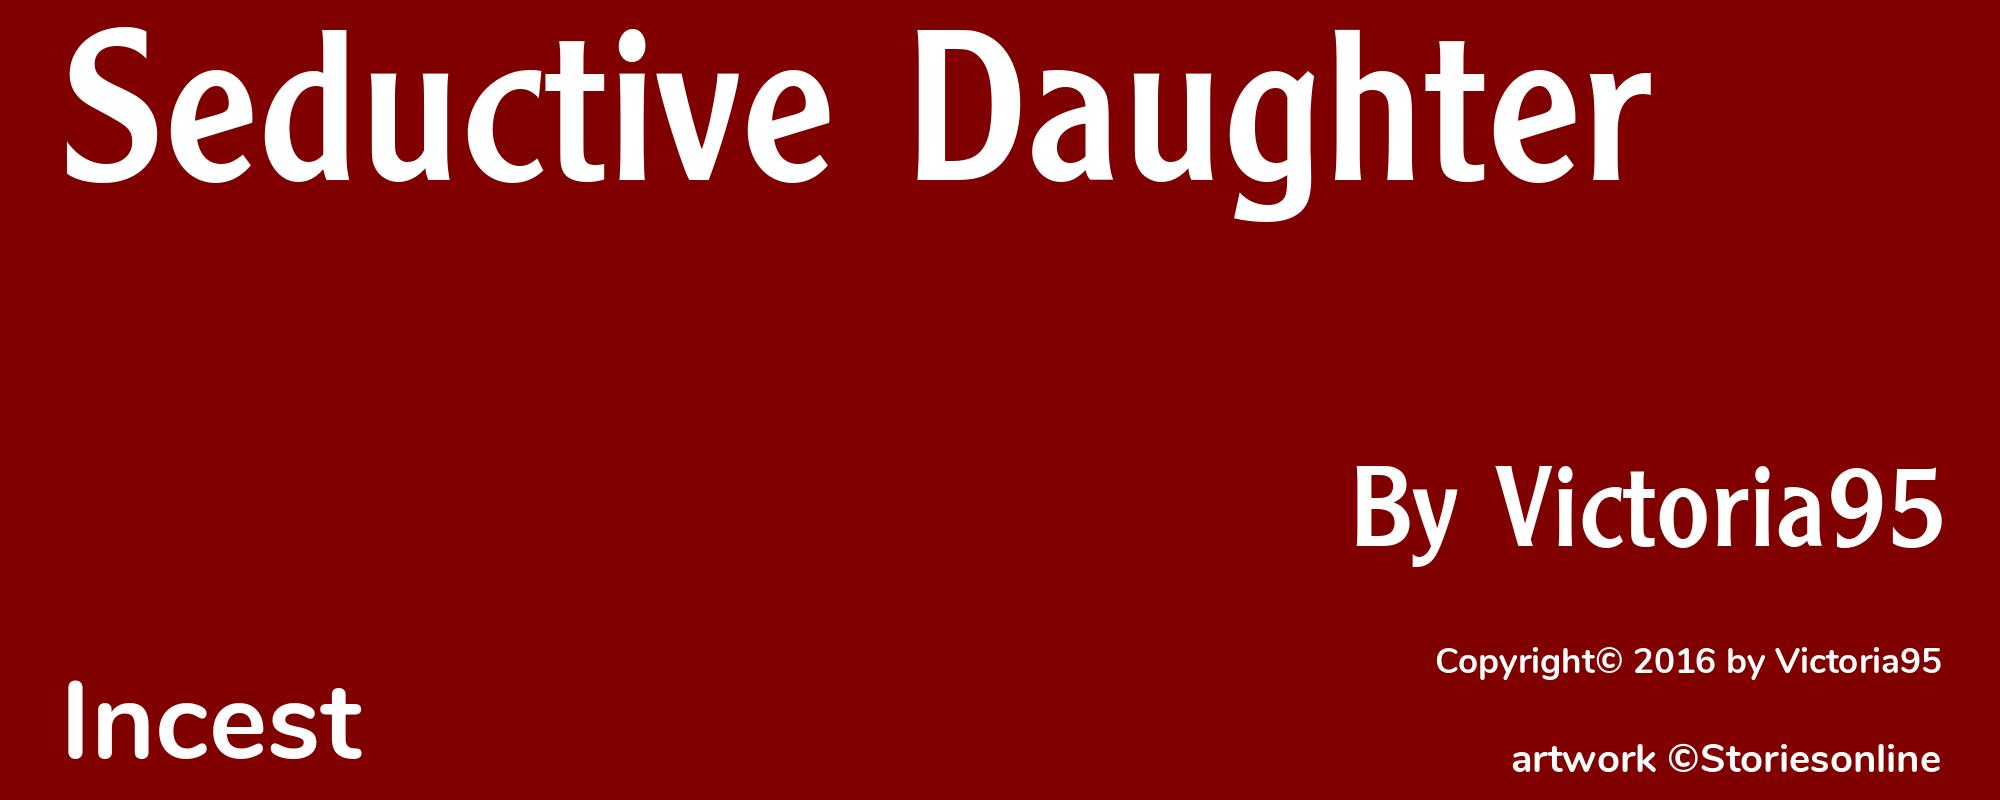 Seductive Daughter - Cover